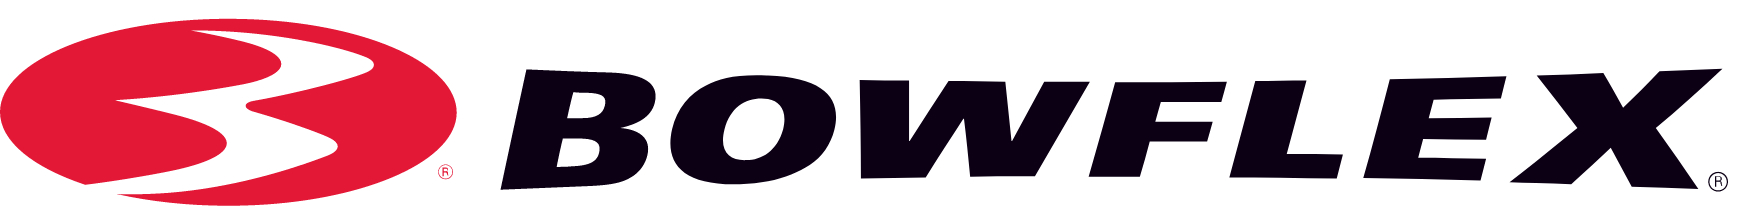 Bowflex_logo